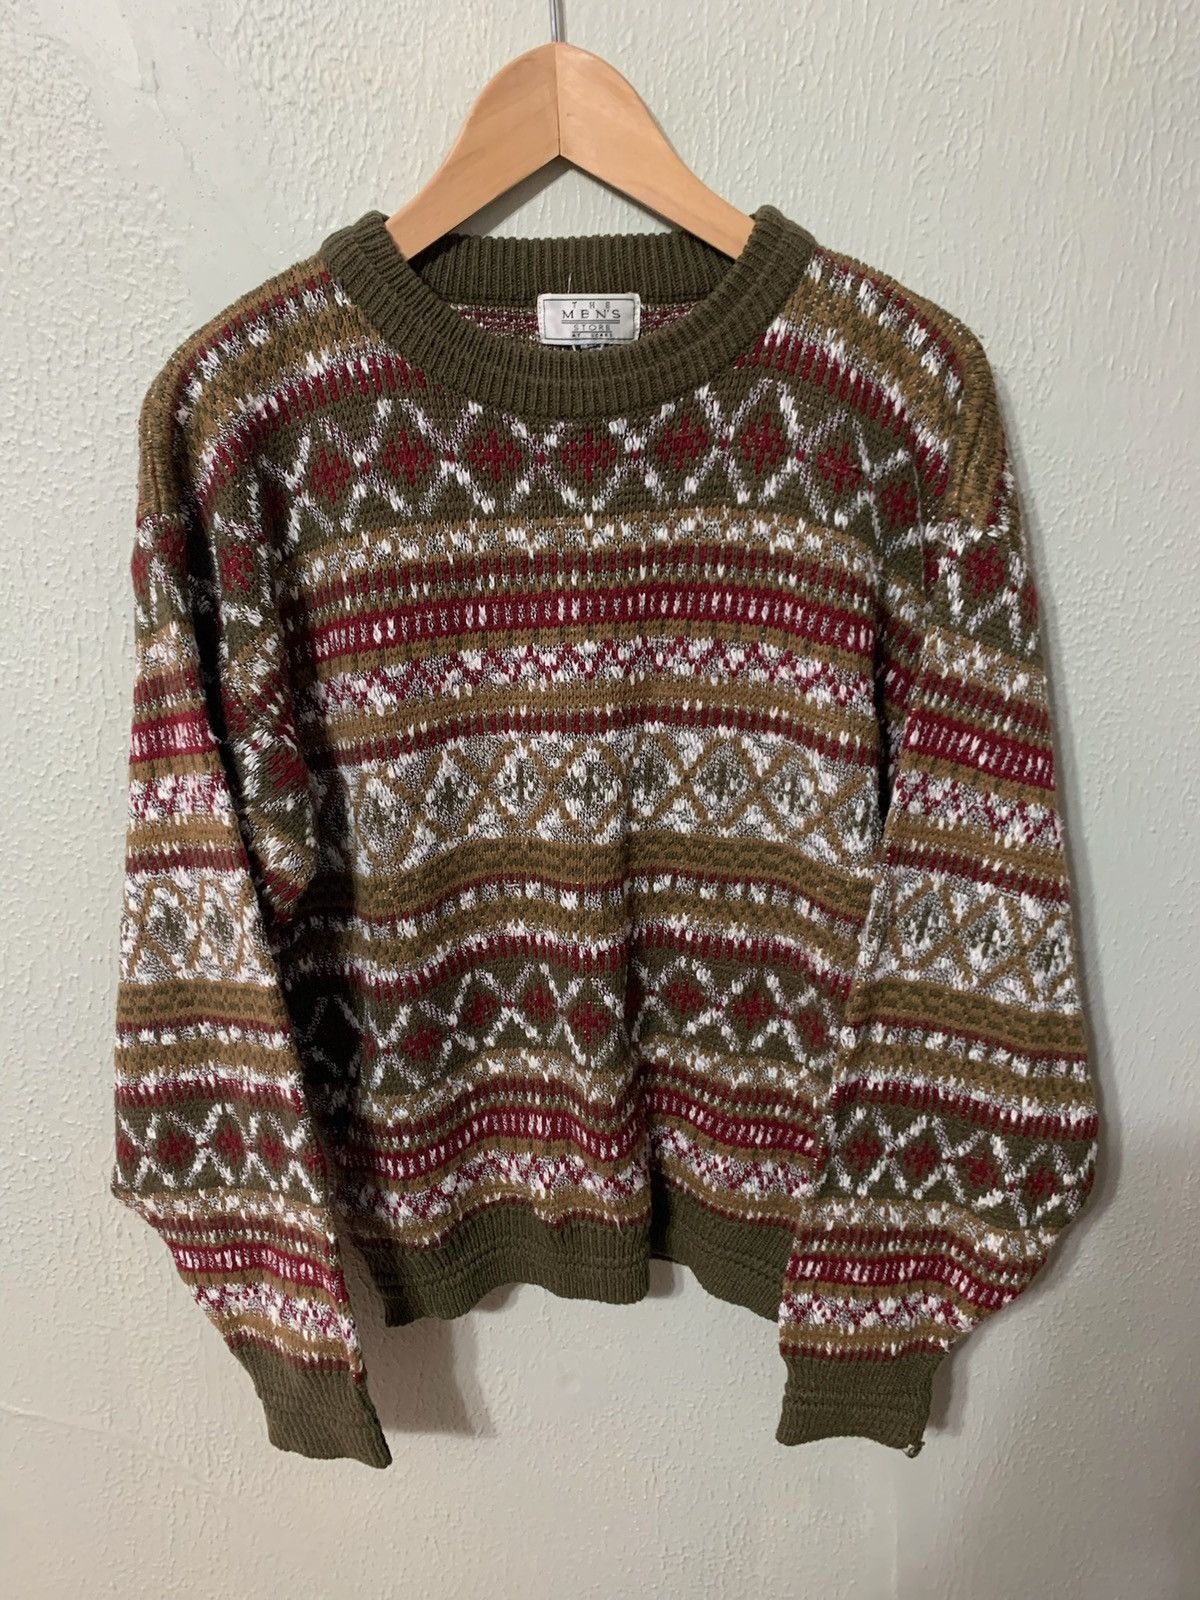 Vintage Vintage Cabin Brush Knit Sweater Size US S / EU 44-46 / 1 - 1 Preview